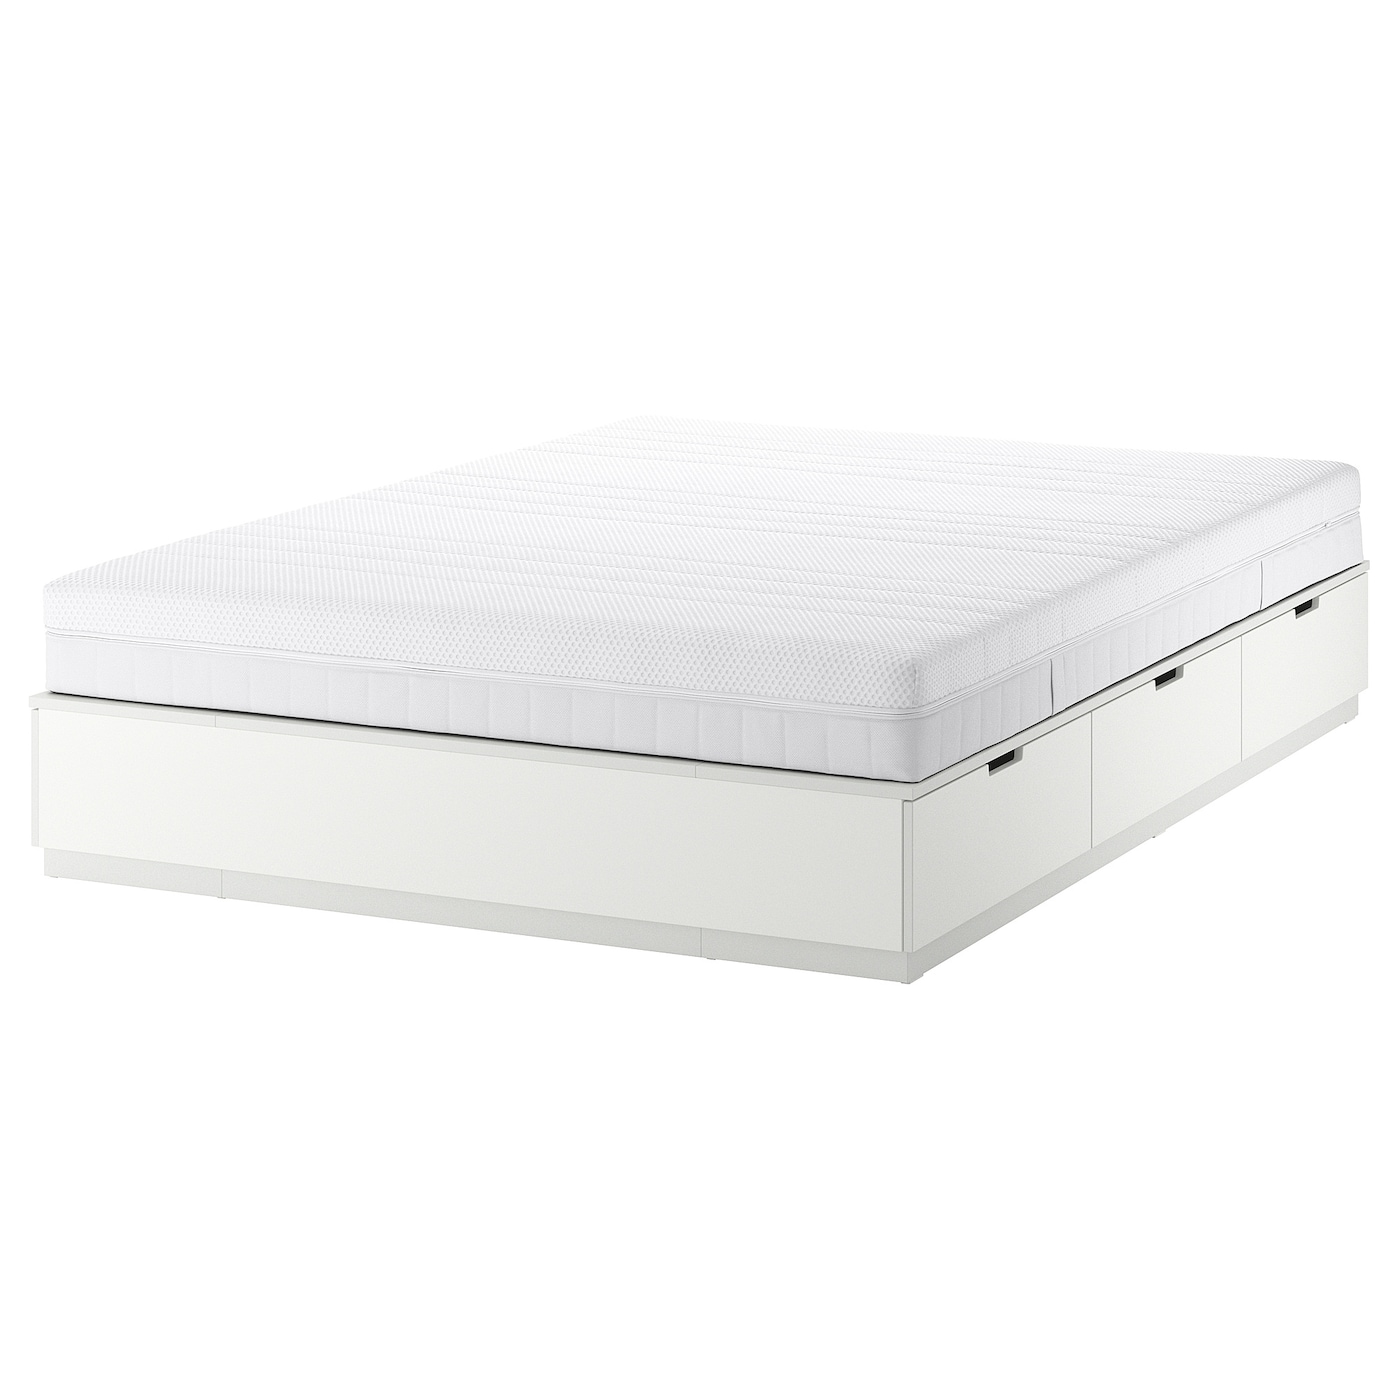 Каркас кровати с ящиком и матрасом - IKEA NORDLI, 200х140 см, матрас жесткий, белый, НОРДЛИ ИКЕА